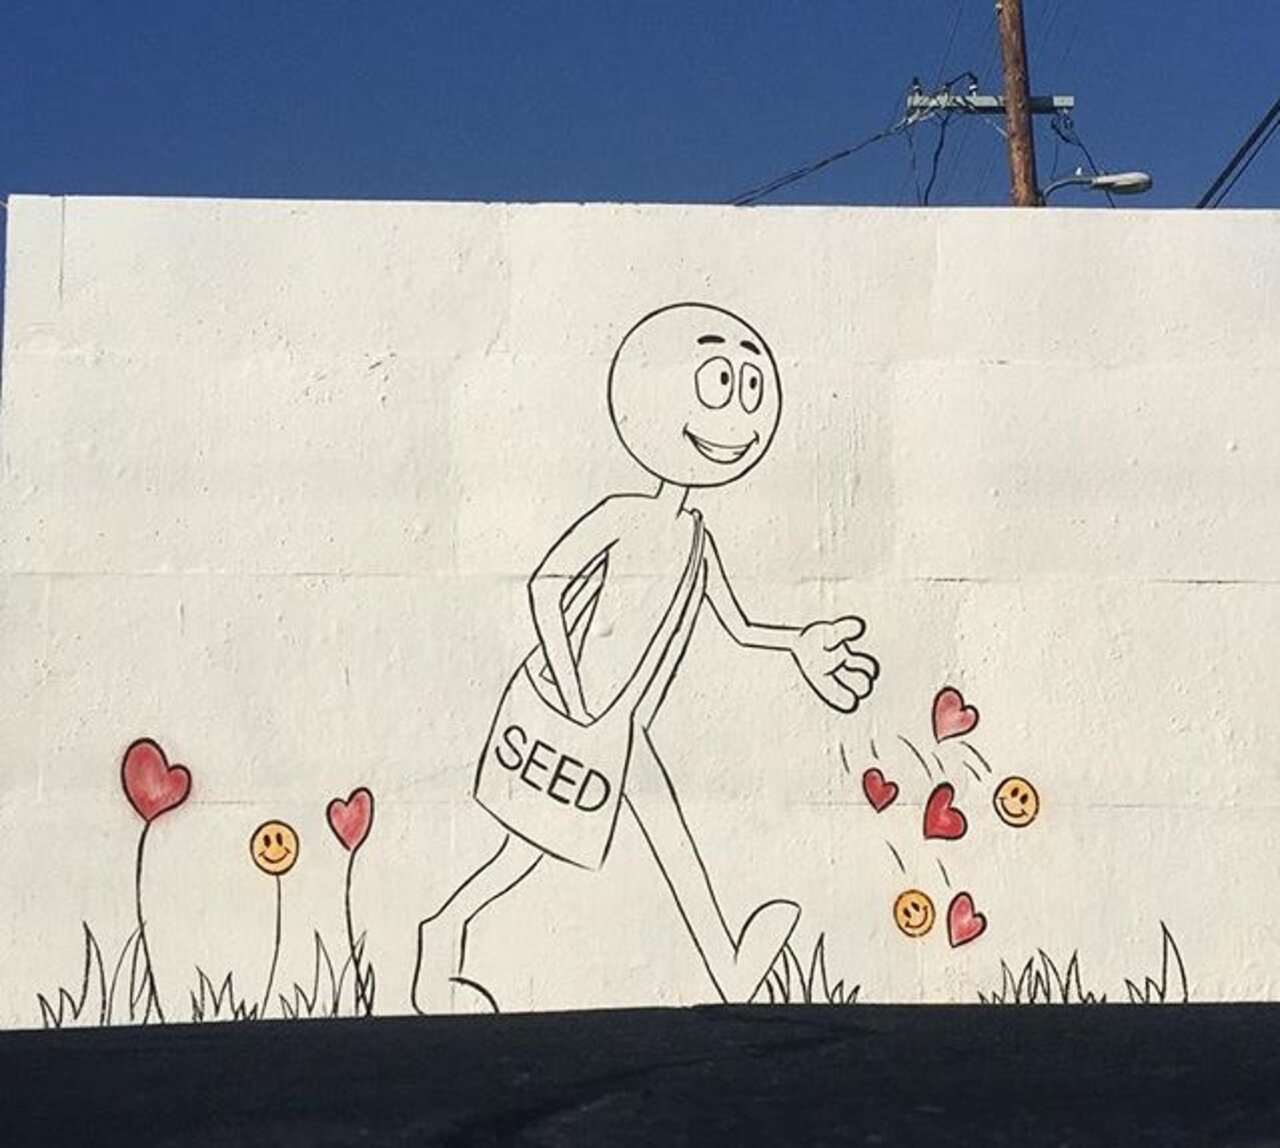 RT @Peepsqueak: #StreetArt by @Kaiaspireart #art #mural #graffiti #streetart https://t.co/fECVX2fOVl |@GoogleStreetArt rt @En_Suspens